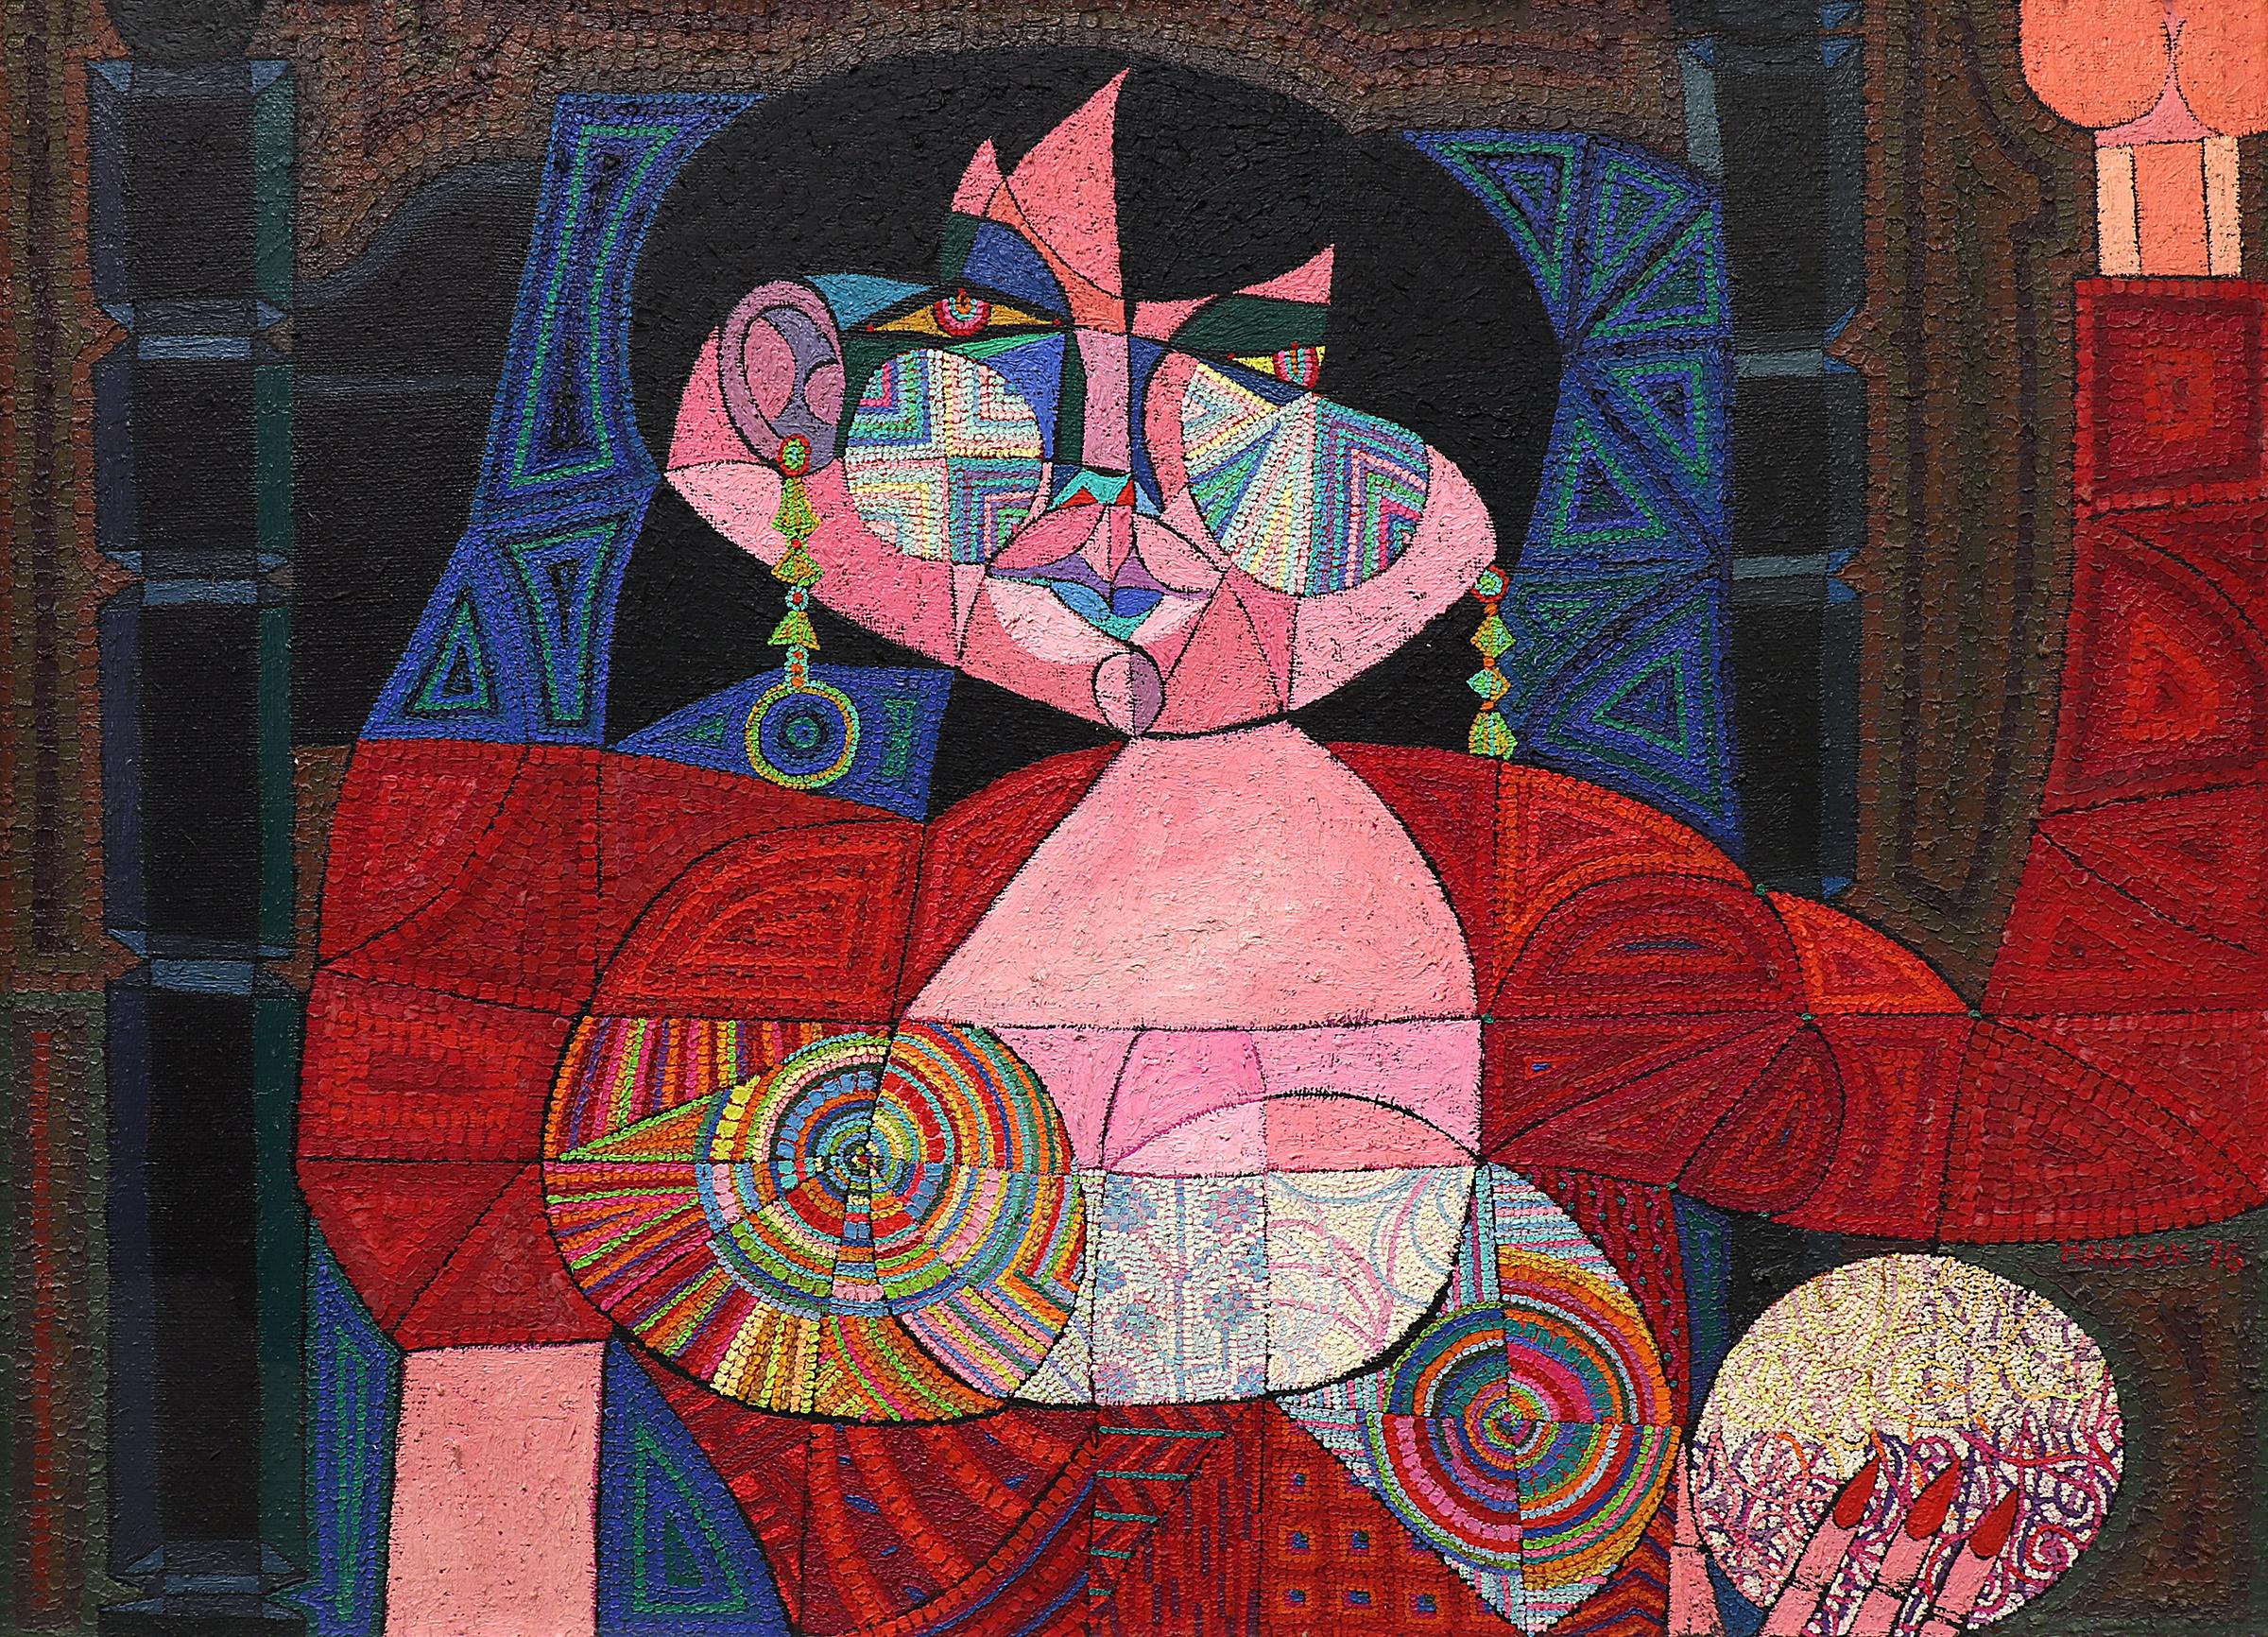 Abstraktes figuratives Ölgemälde Sybil (Die Göttin), 1970er Jahre, Rosa, Blau, Rot – Painting von Edward Marecak